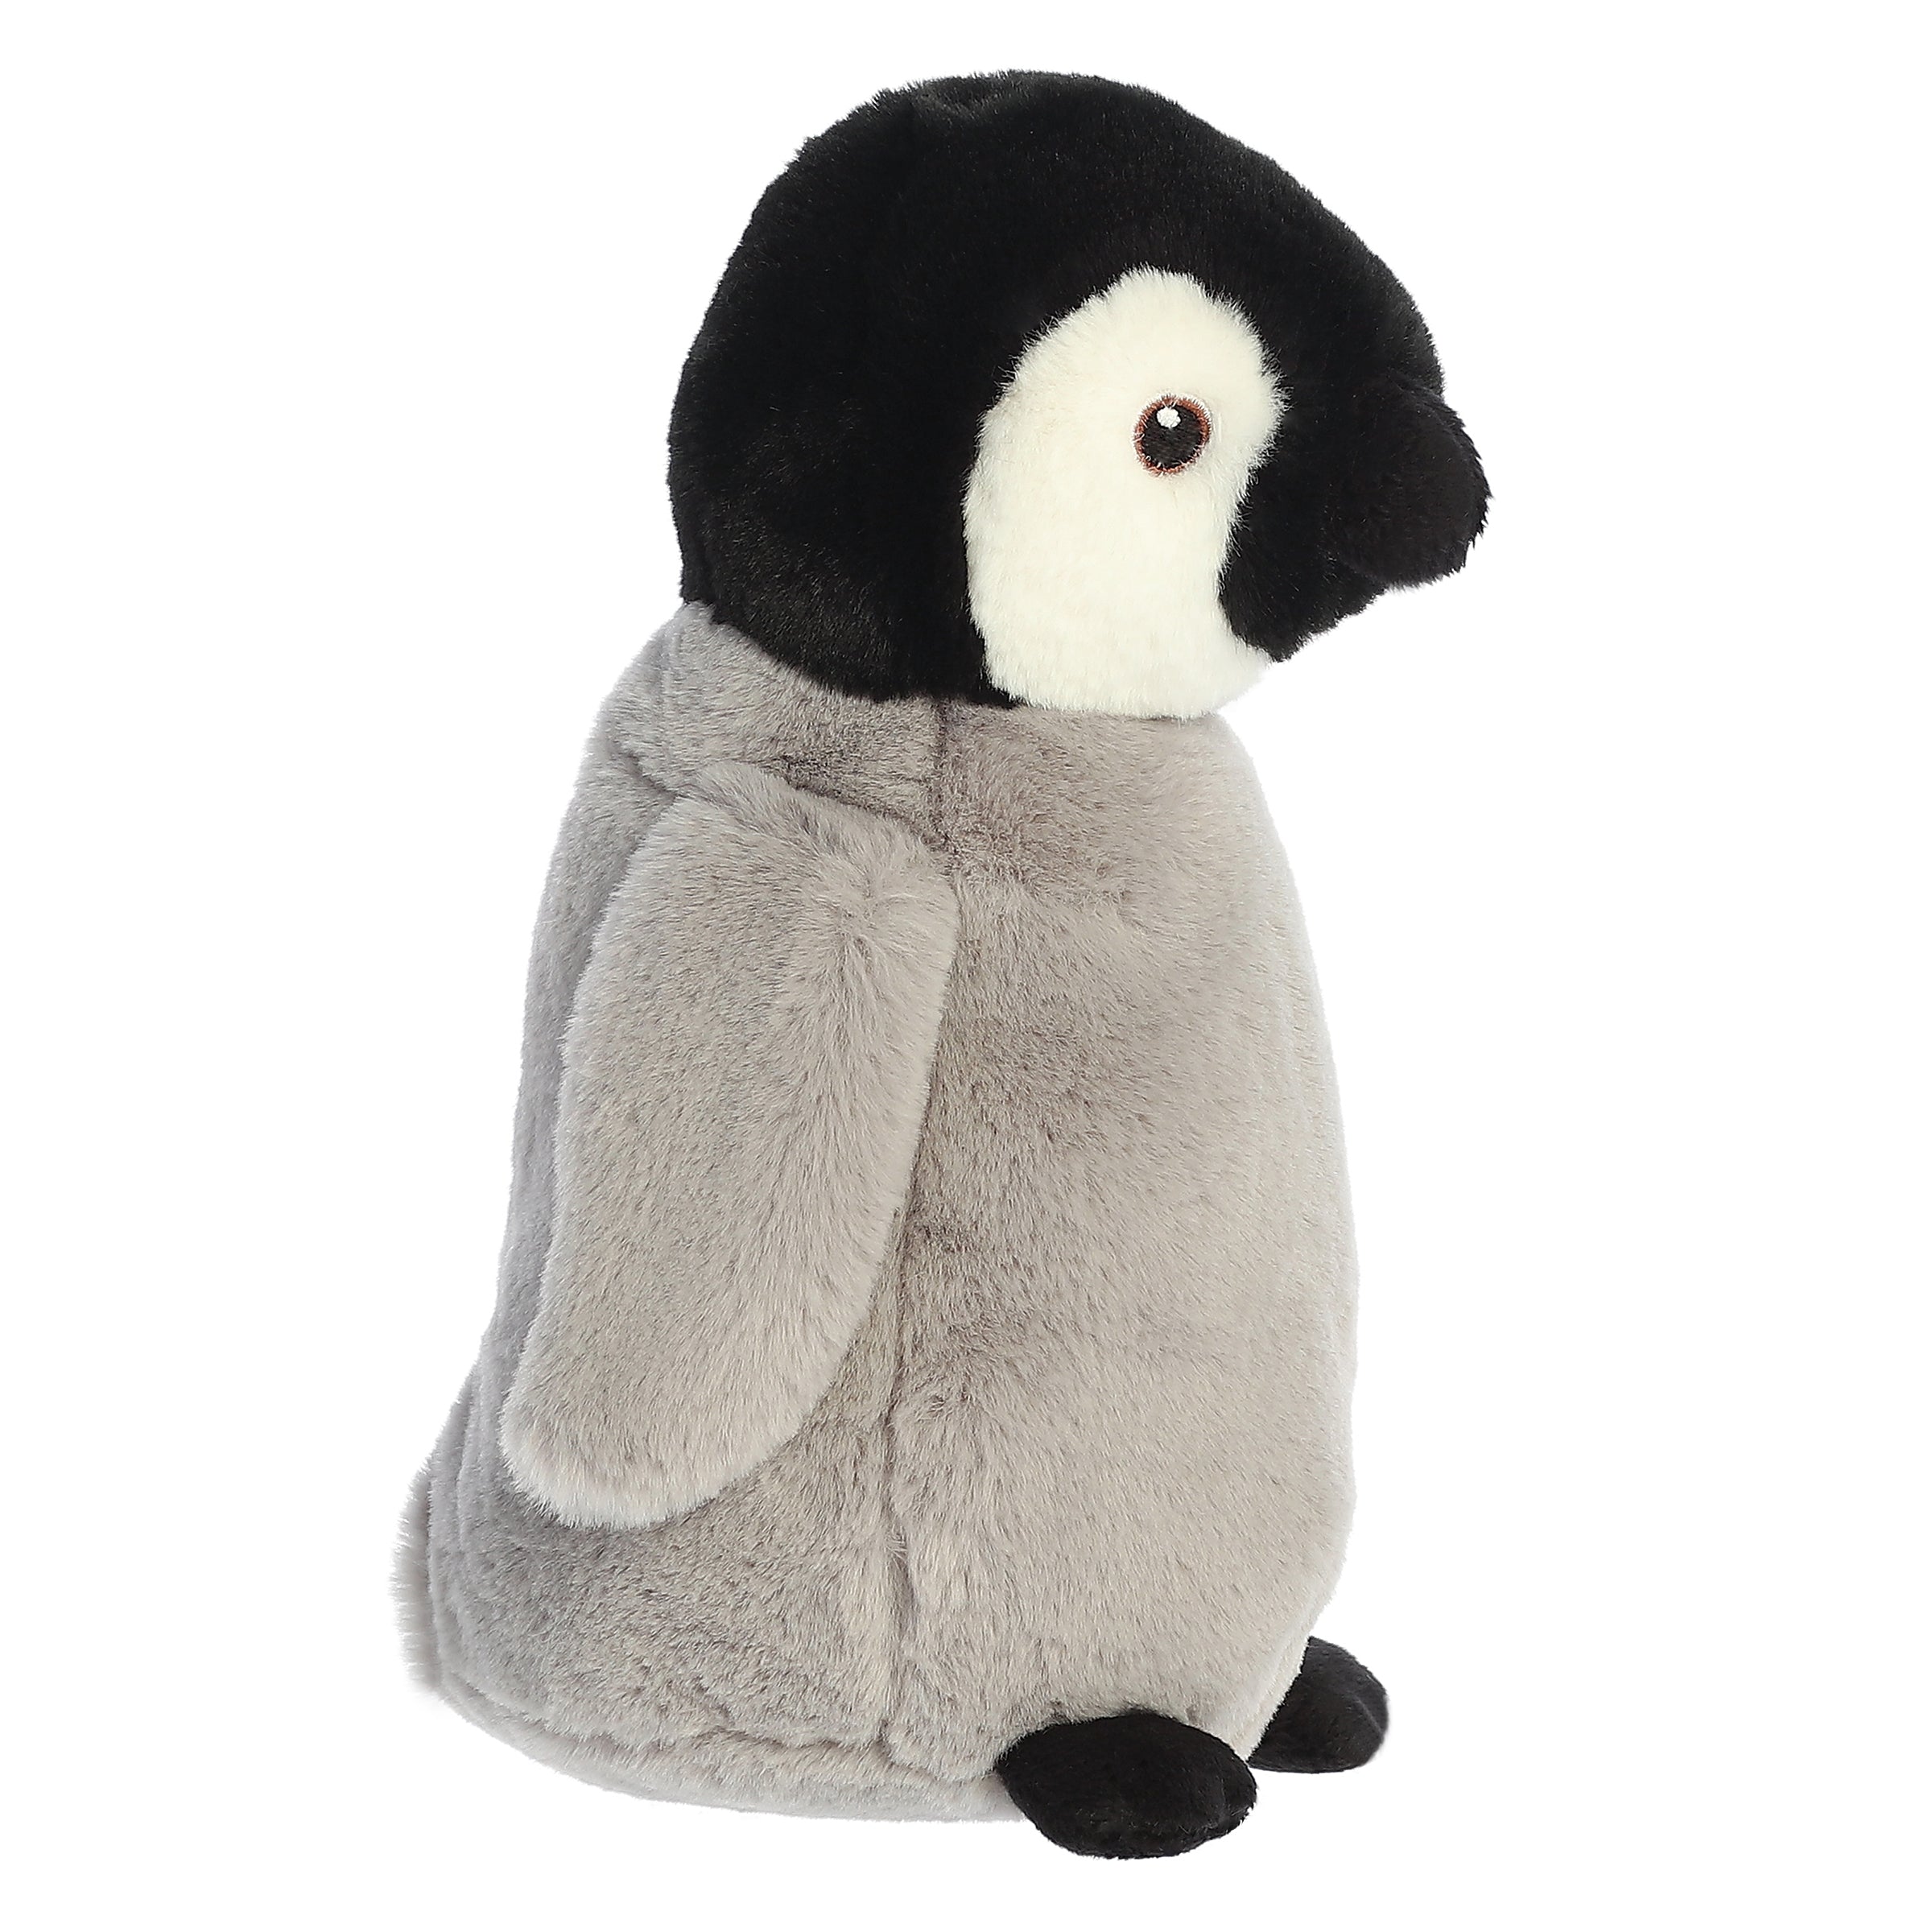 Eco Nation Stofftier - Mini - Pinguin - Recycelt, Eco-Logisch